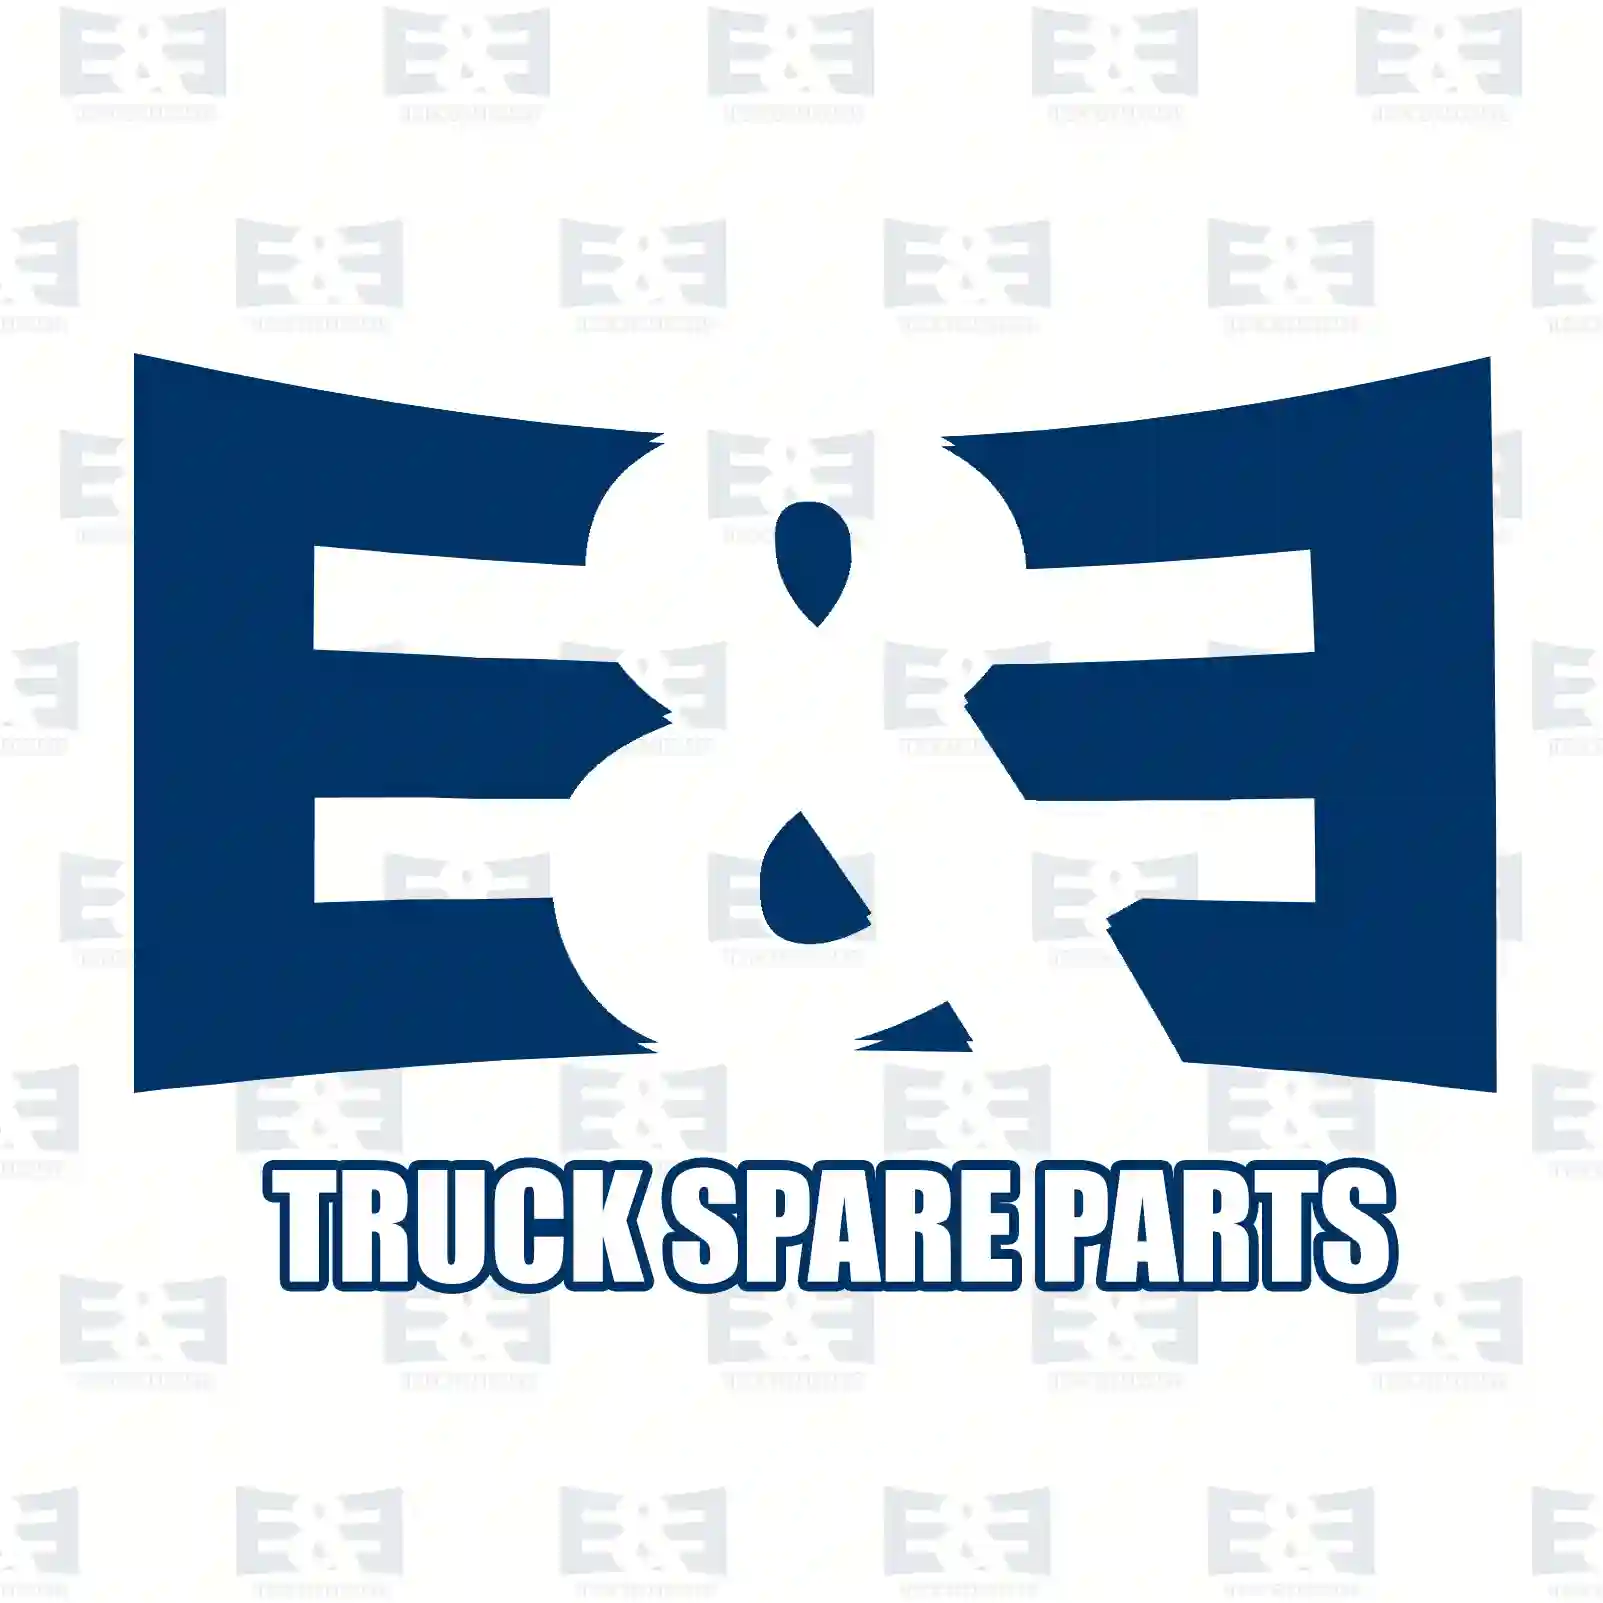 Disc brake pad kit, with accessories, 2E2297439, 1371454, 1433958, 1530602, 1554524, 1560026, 1819638, 1824348, 1852717, 6C11-2M008-AC, 6C11-2M008-AE, 6C11-2M008-AF ||  2E2297439 E&E Truck Spare Parts | Truck Spare Parts, Auotomotive Spare Parts Disc brake pad kit, with accessories, 2E2297439, 1371454, 1433958, 1530602, 1554524, 1560026, 1819638, 1824348, 1852717, 6C11-2M008-AC, 6C11-2M008-AE, 6C11-2M008-AF ||  2E2297439 E&E Truck Spare Parts | Truck Spare Parts, Auotomotive Spare Parts